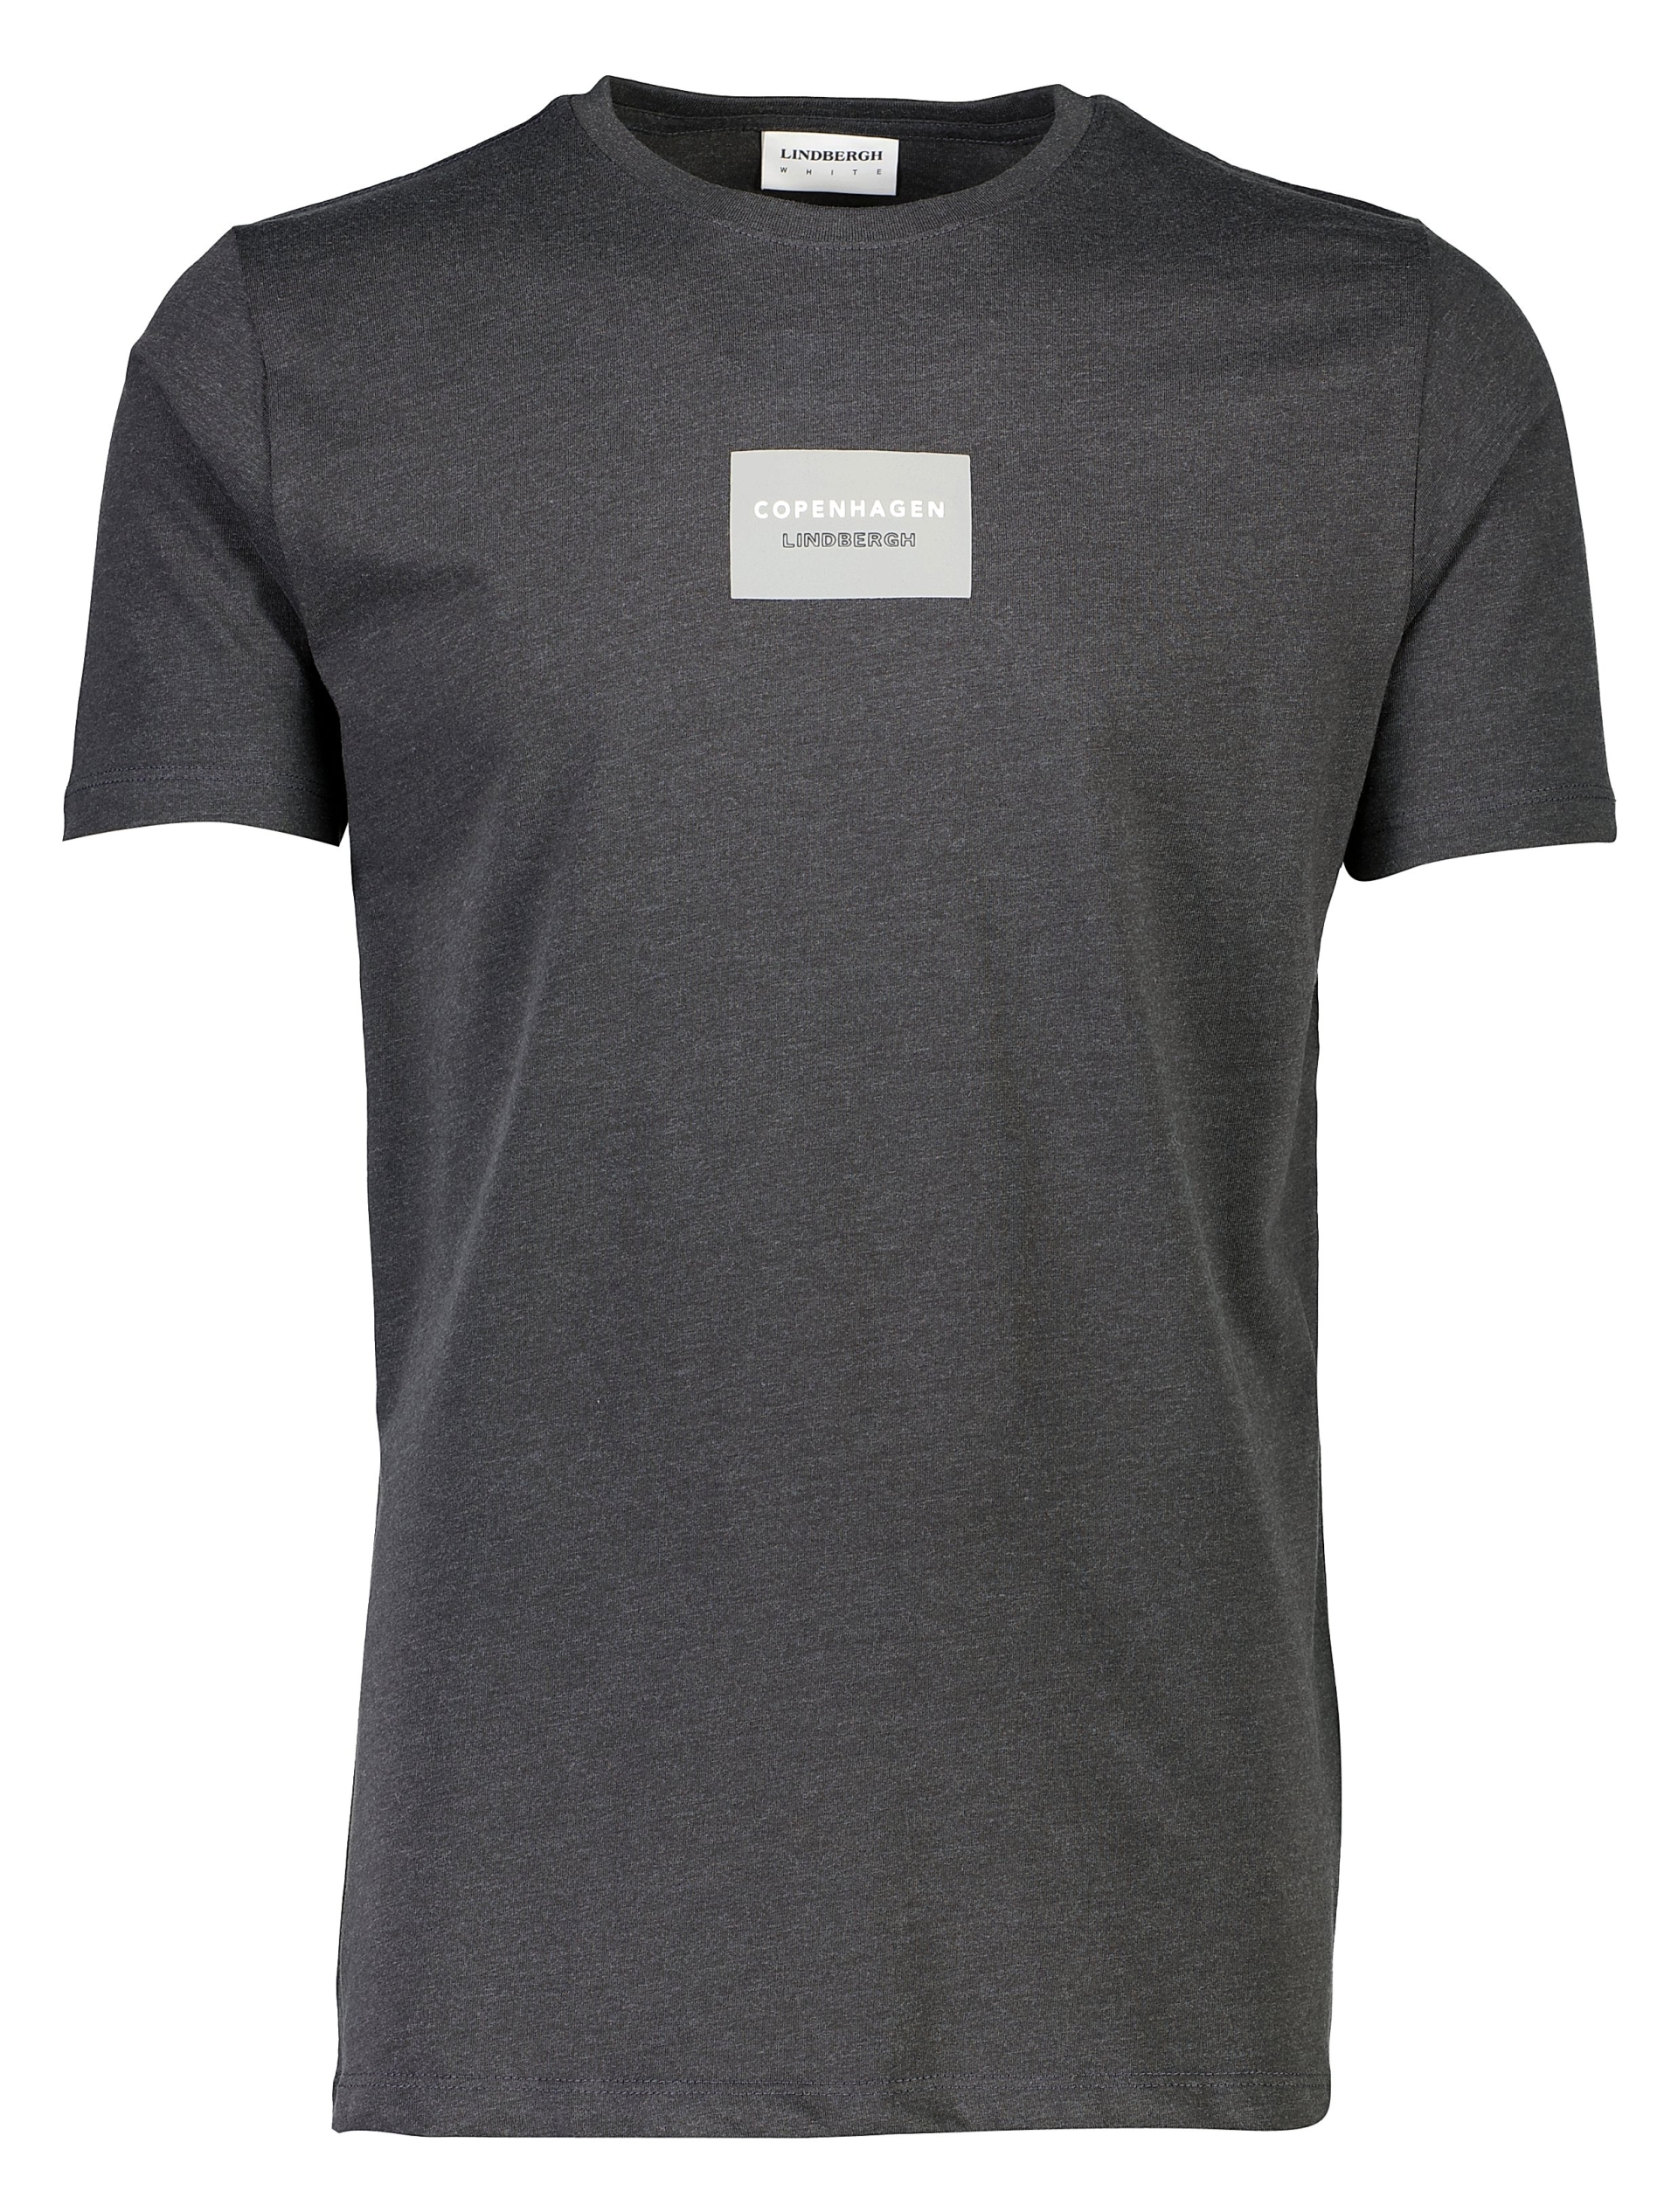 Lindbergh T-shirt svart / black mel